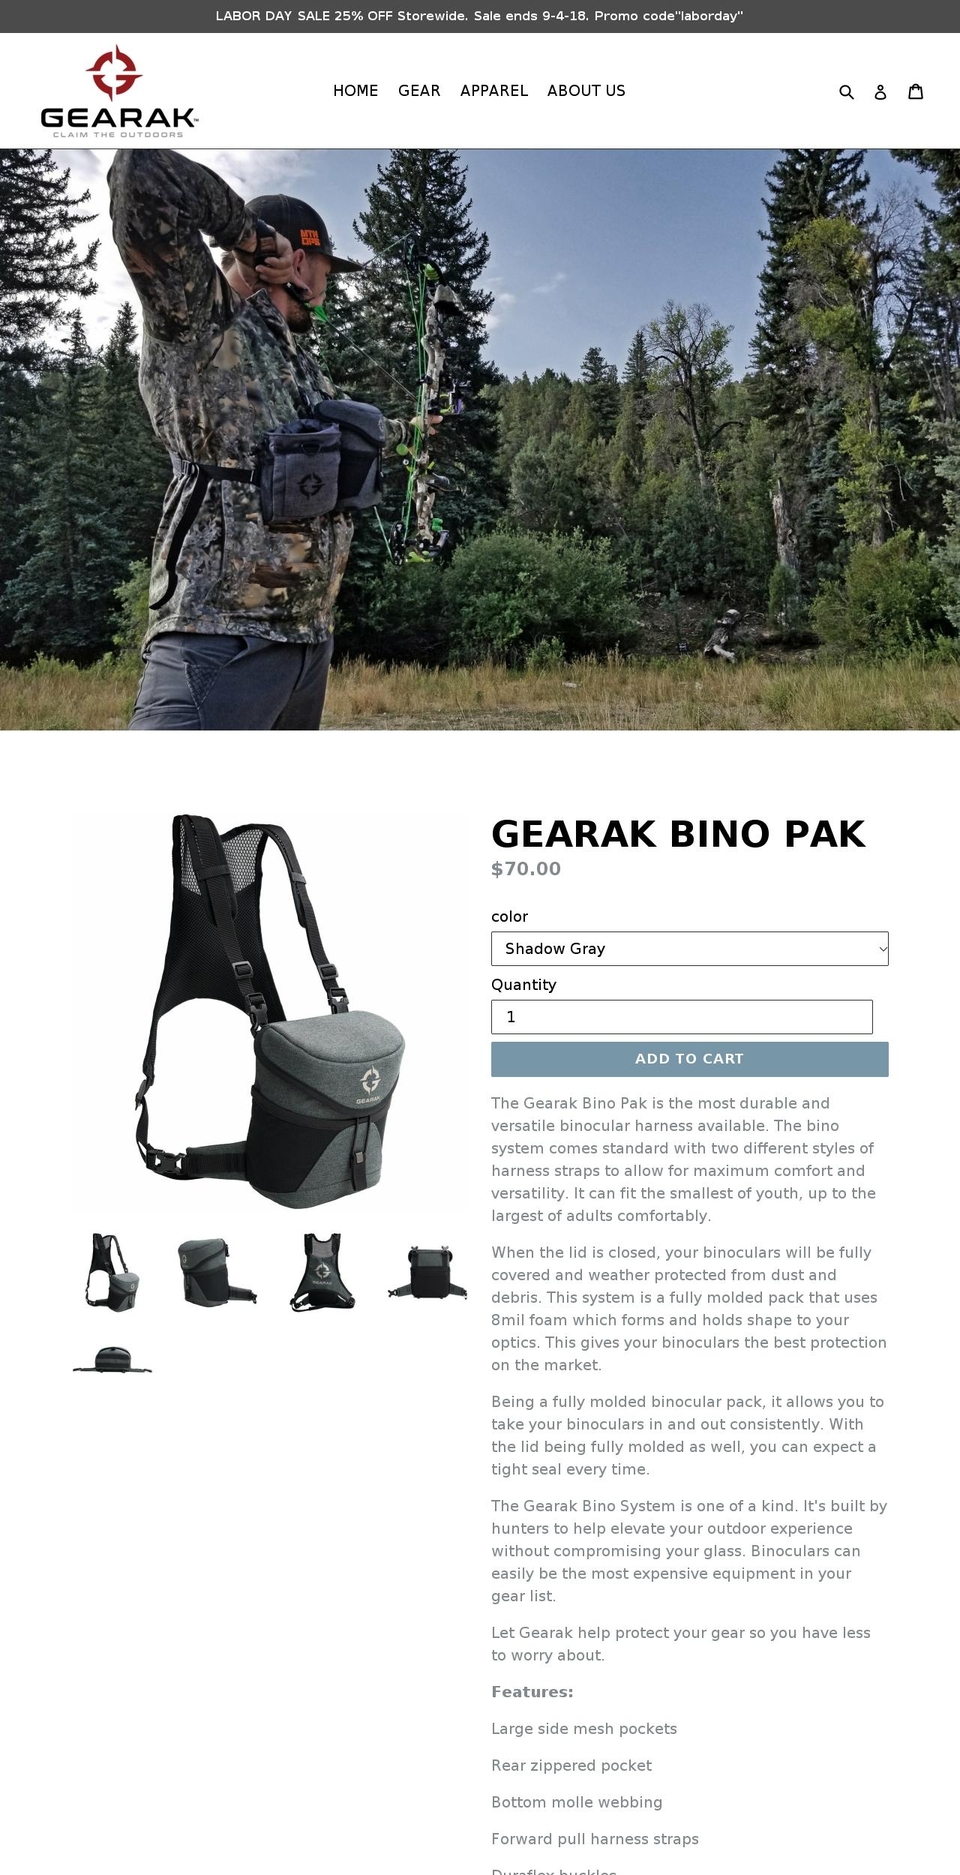 NEW Shopify theme site example gearak.com